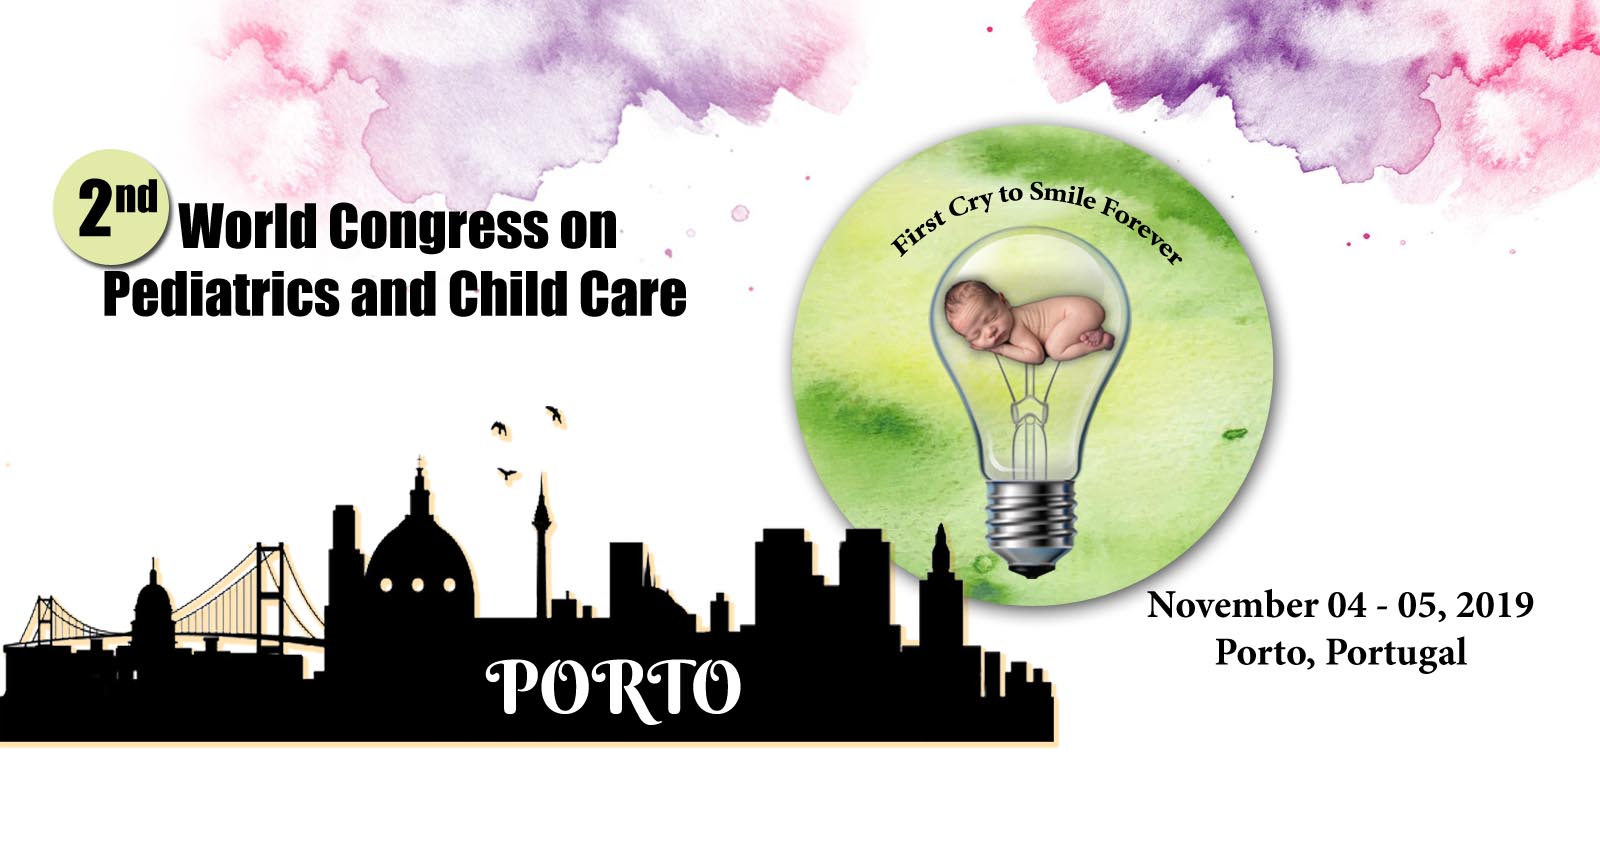  2nd World Congress on Pediatrics and Child Care